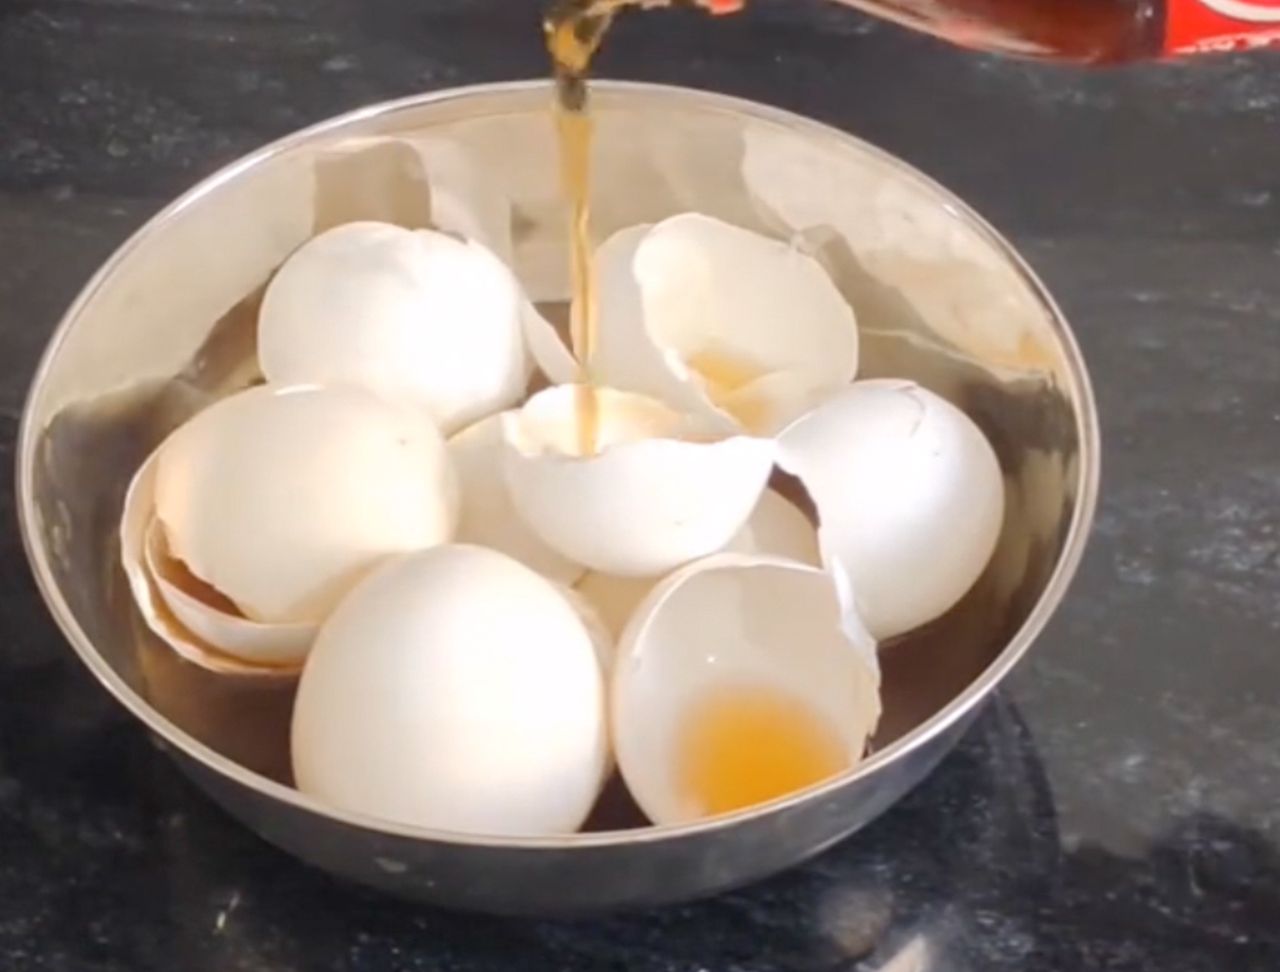 Scrub no more: Surprising kitchen hack uses eggshells and cola